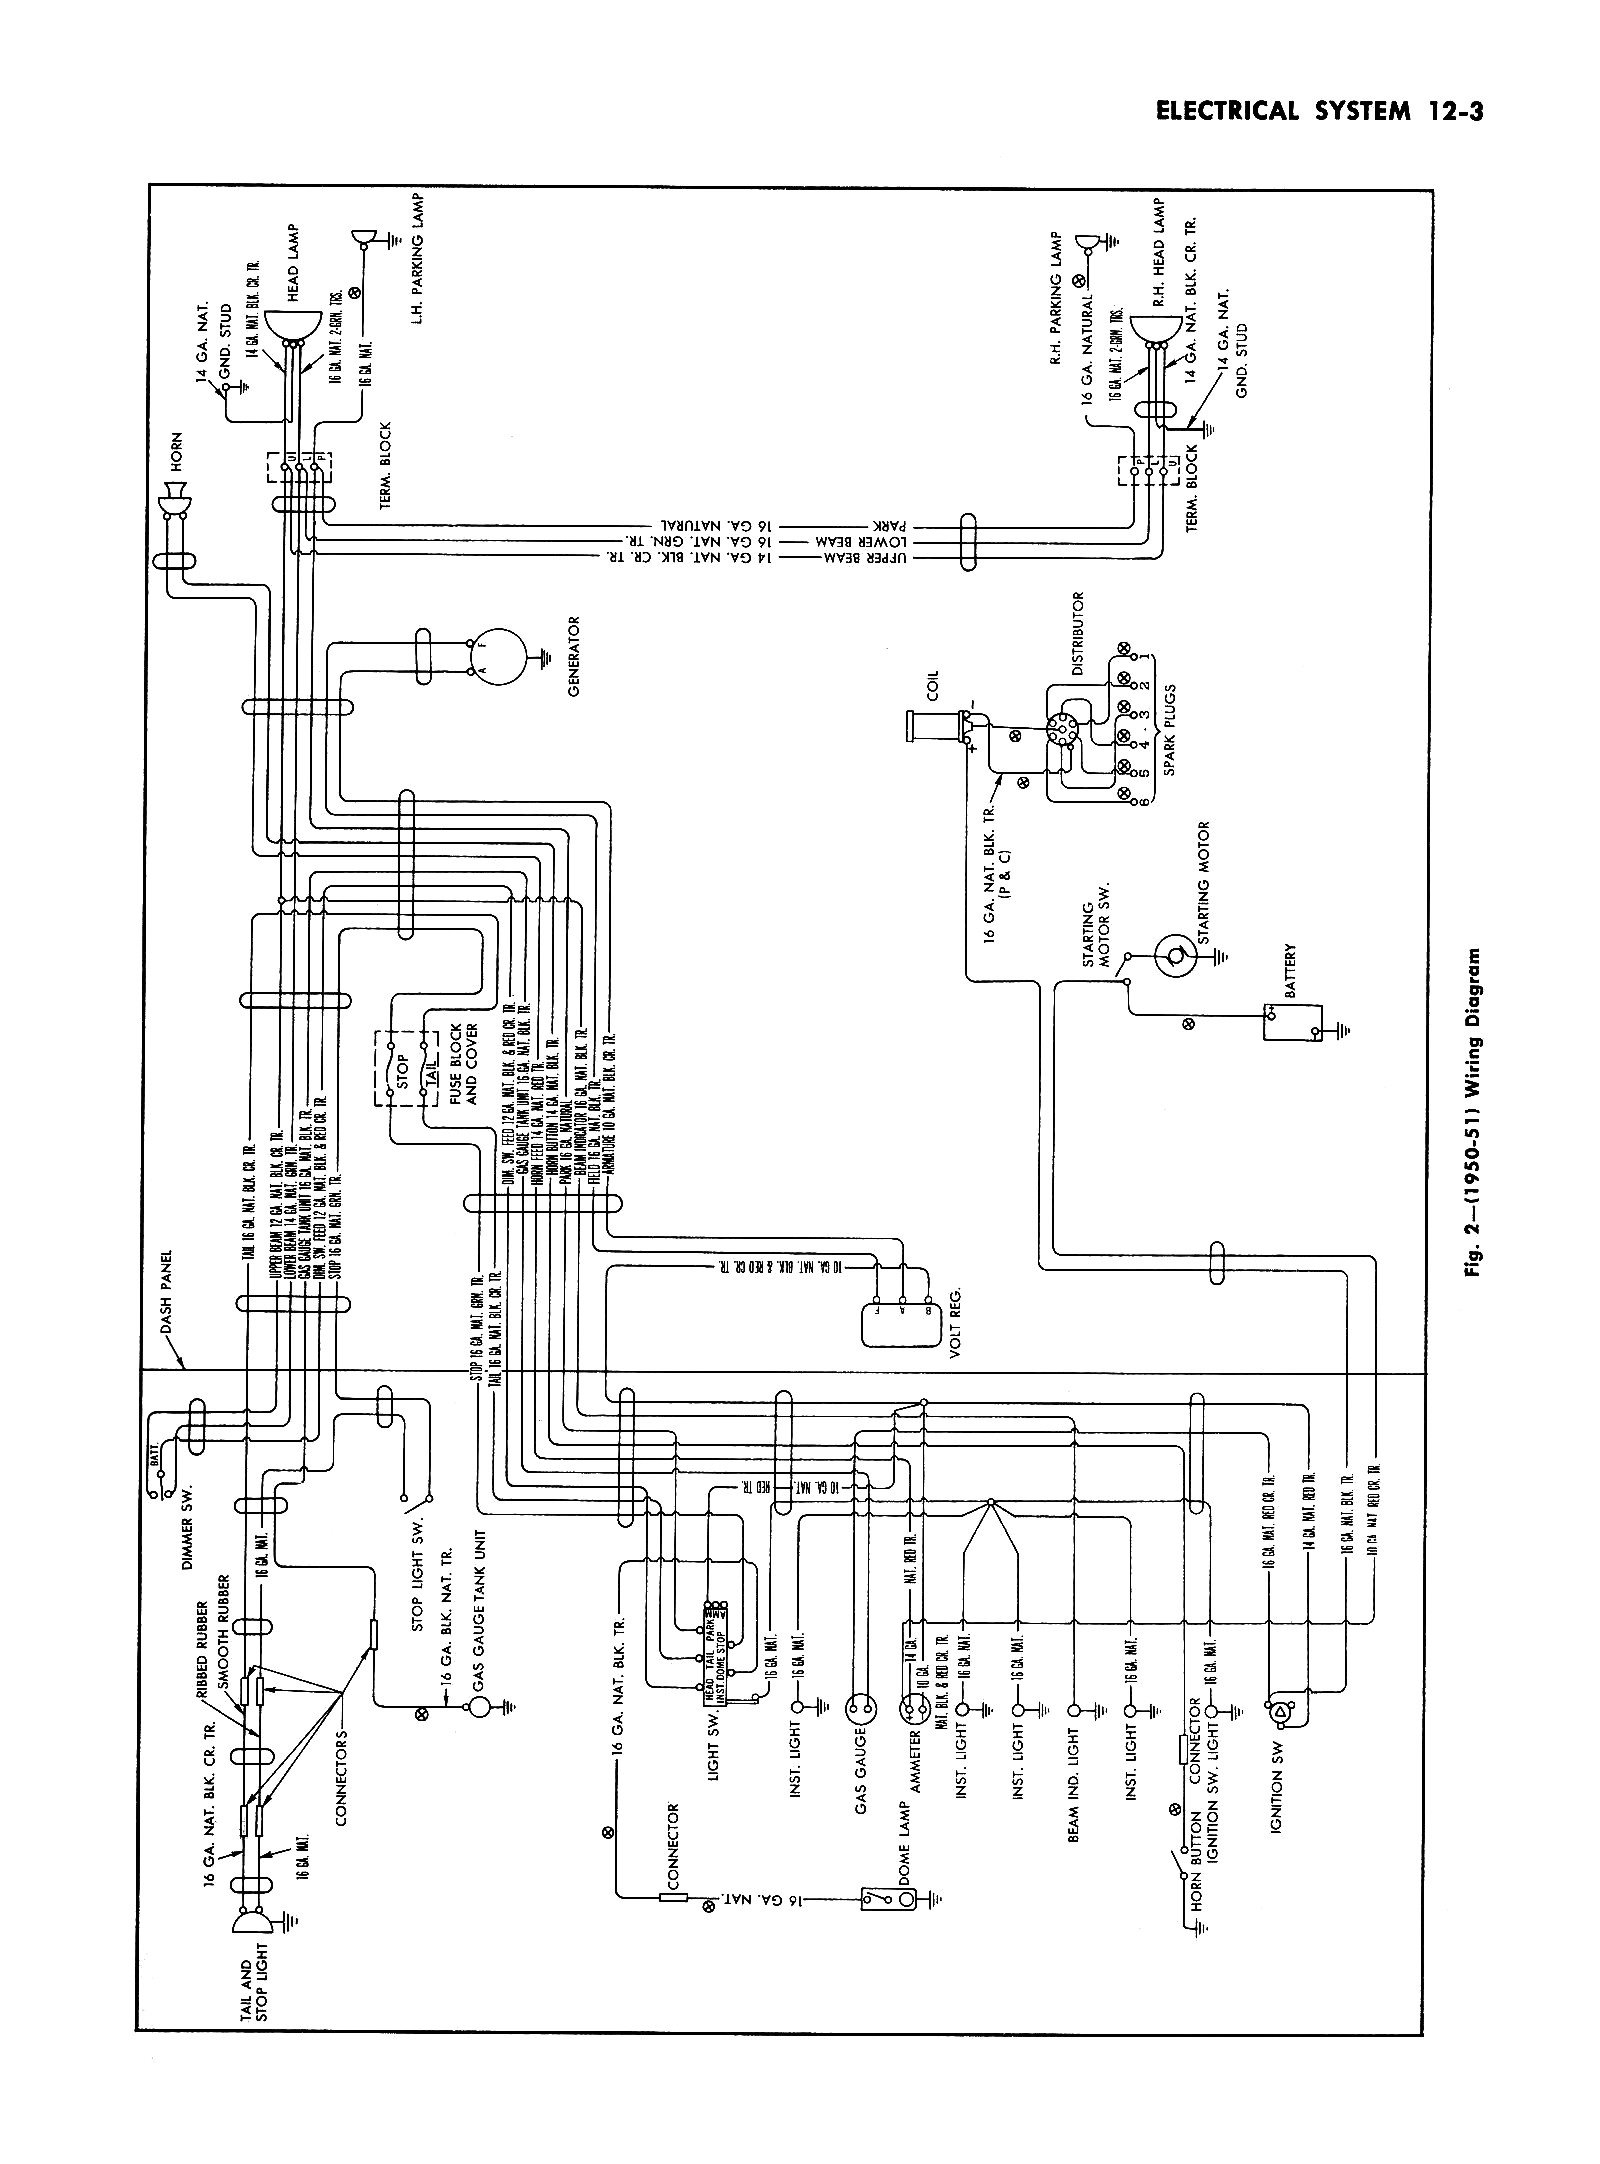 1981 toyota celica overdrive wiring diagram